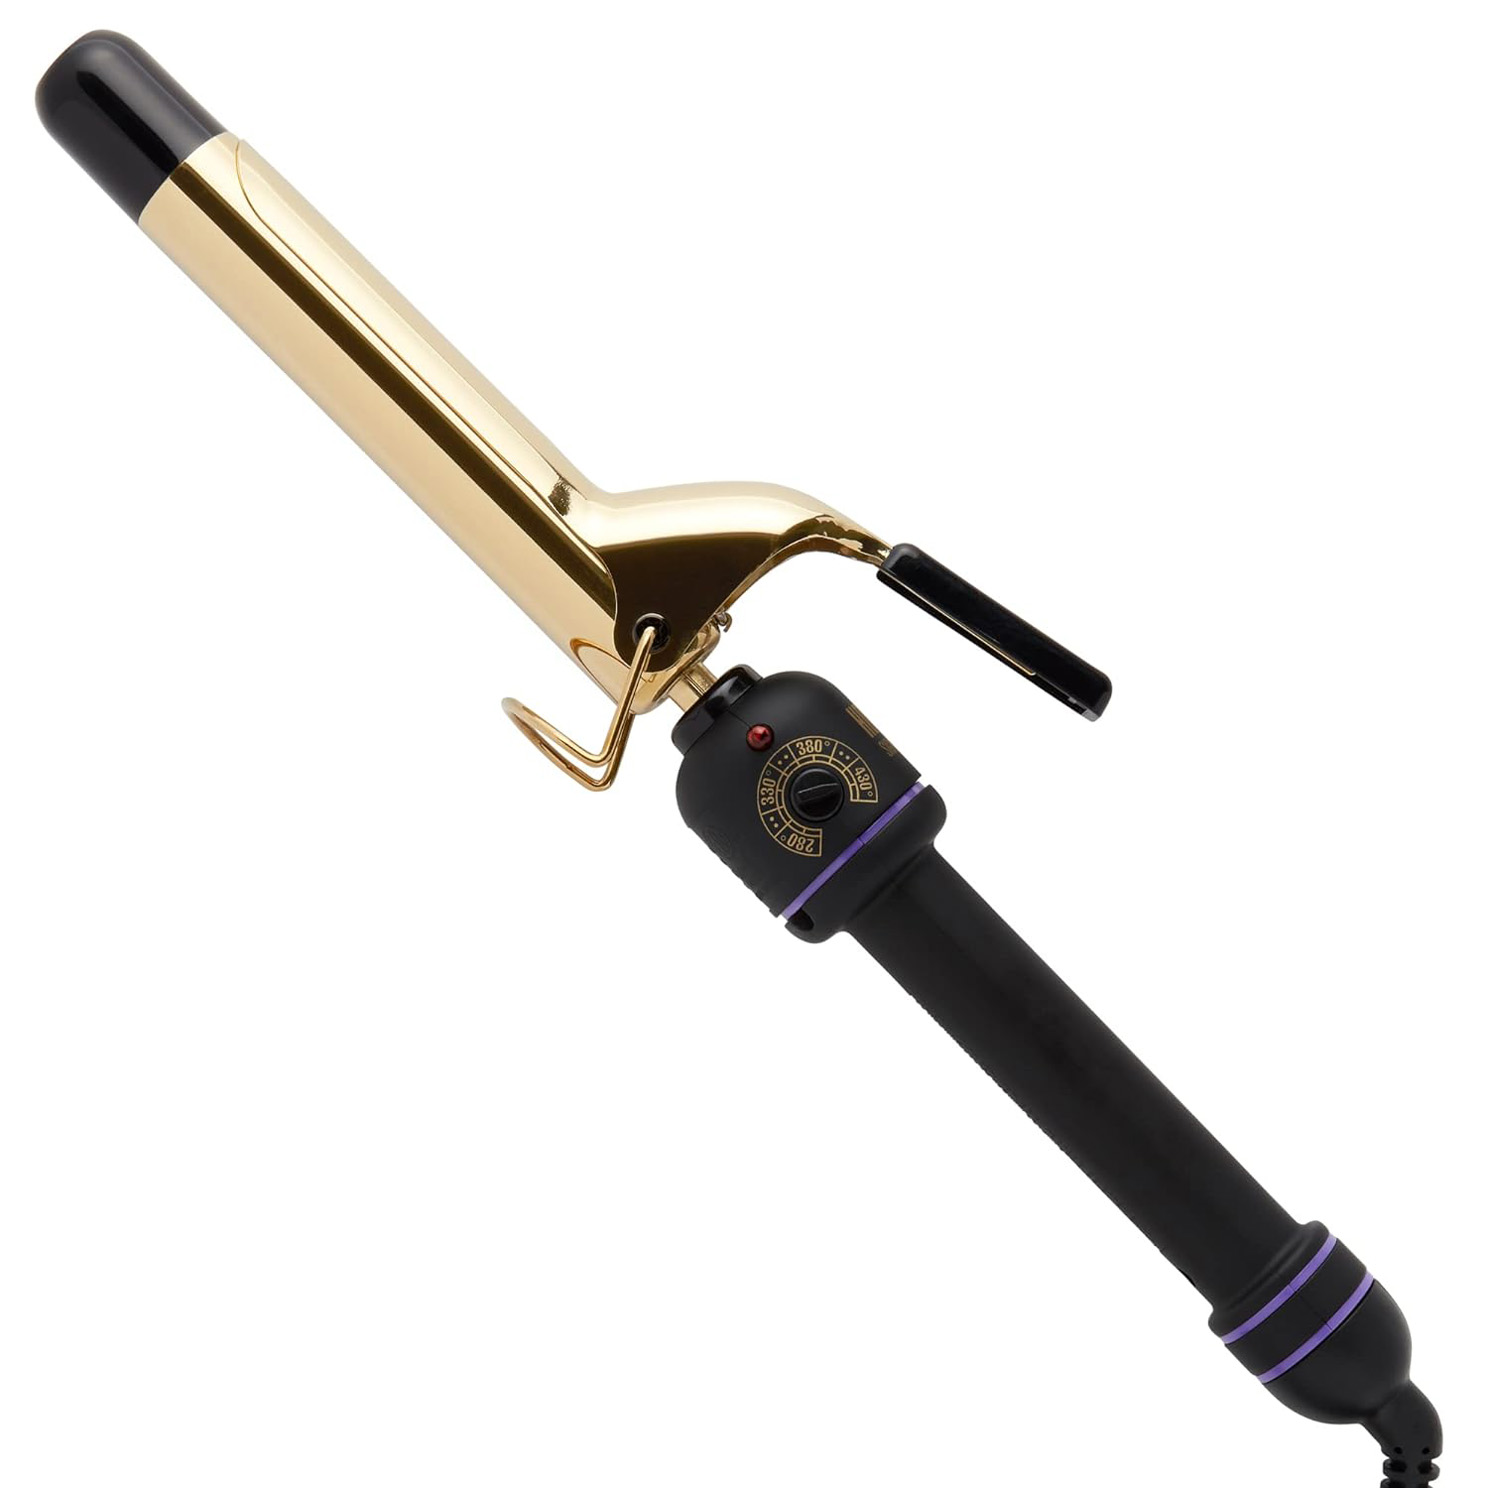 Hot Tools Pro Signature 24K Gold Curling Iron/Wand | Long-Lasting, Defined Curls